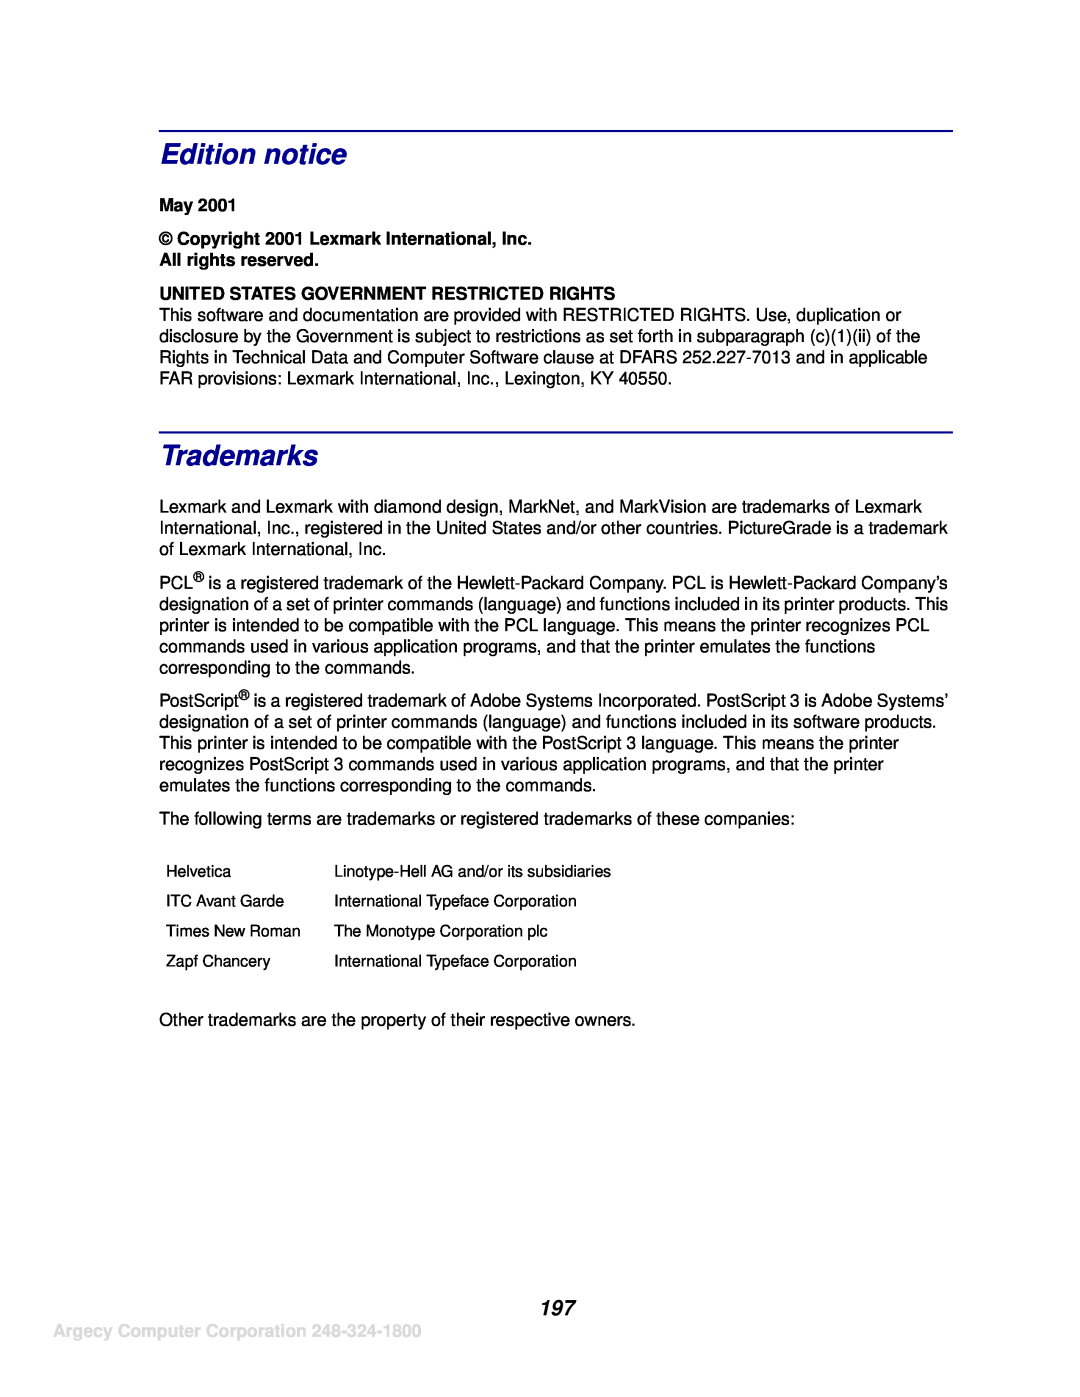 IBM 1120, 1125 manual Edition notice, Trademarks, May Copyright 2001 Lexmark International, Inc. All rights reserved 